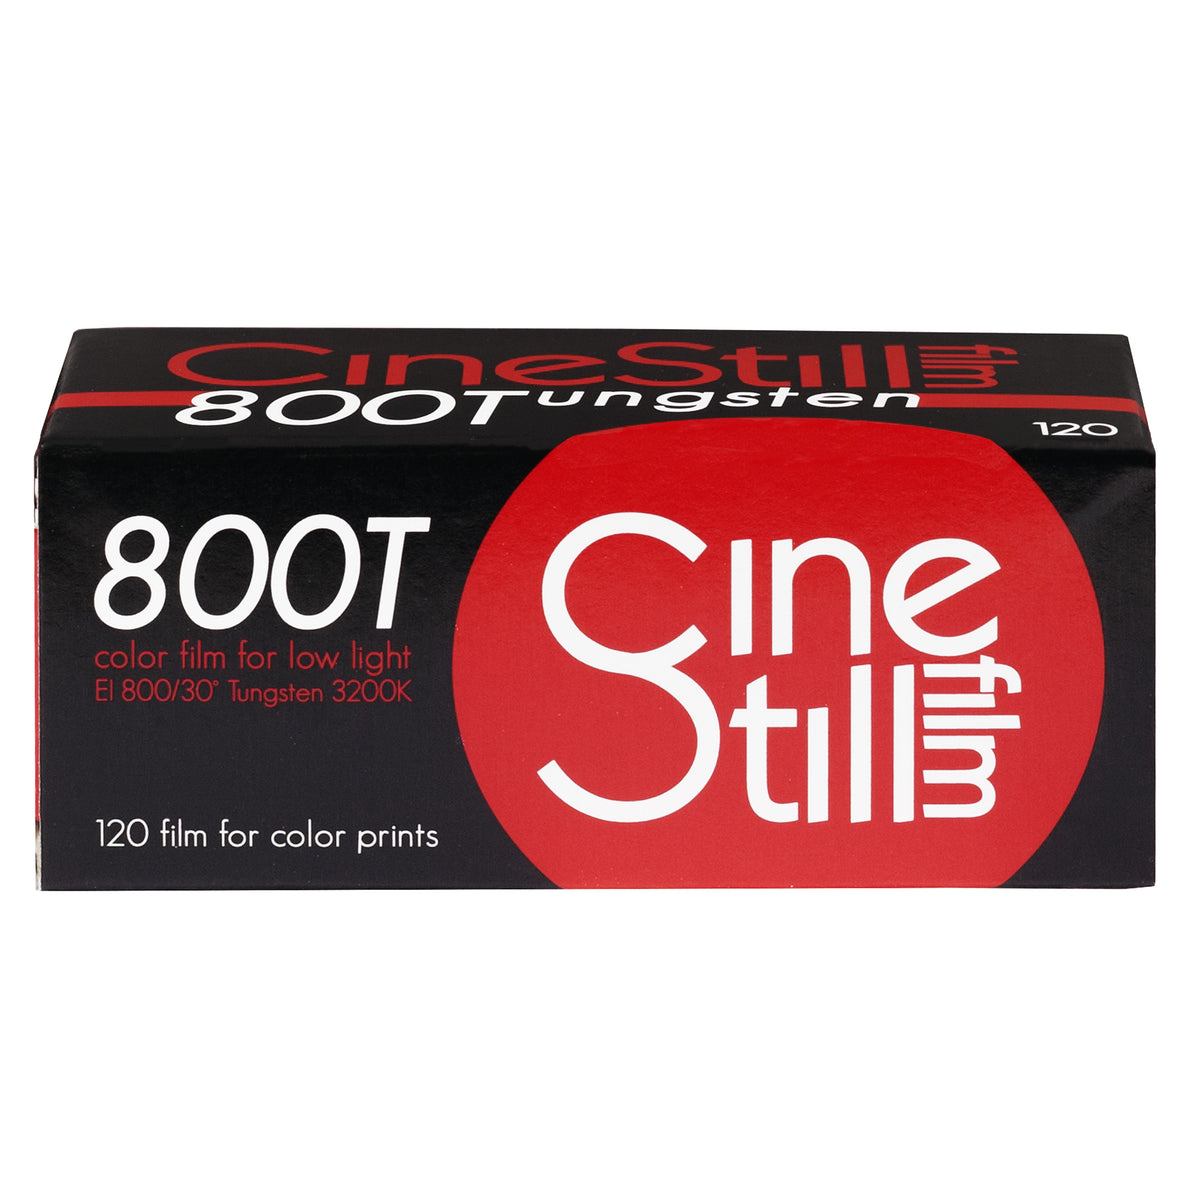 CineStill 800t 120 — Legacy Photo Lab